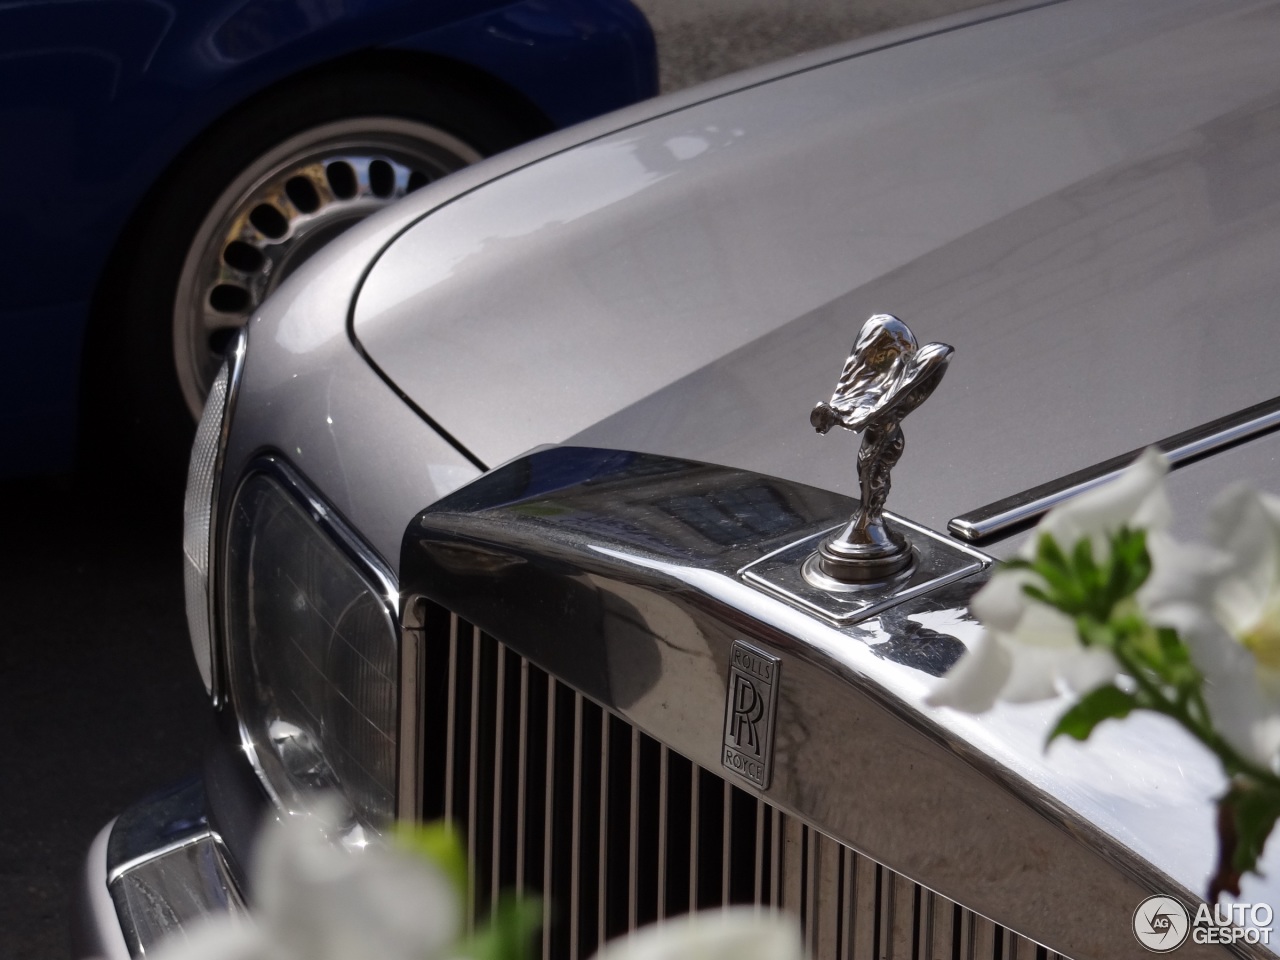 Rolls-Royce Silver Seraph